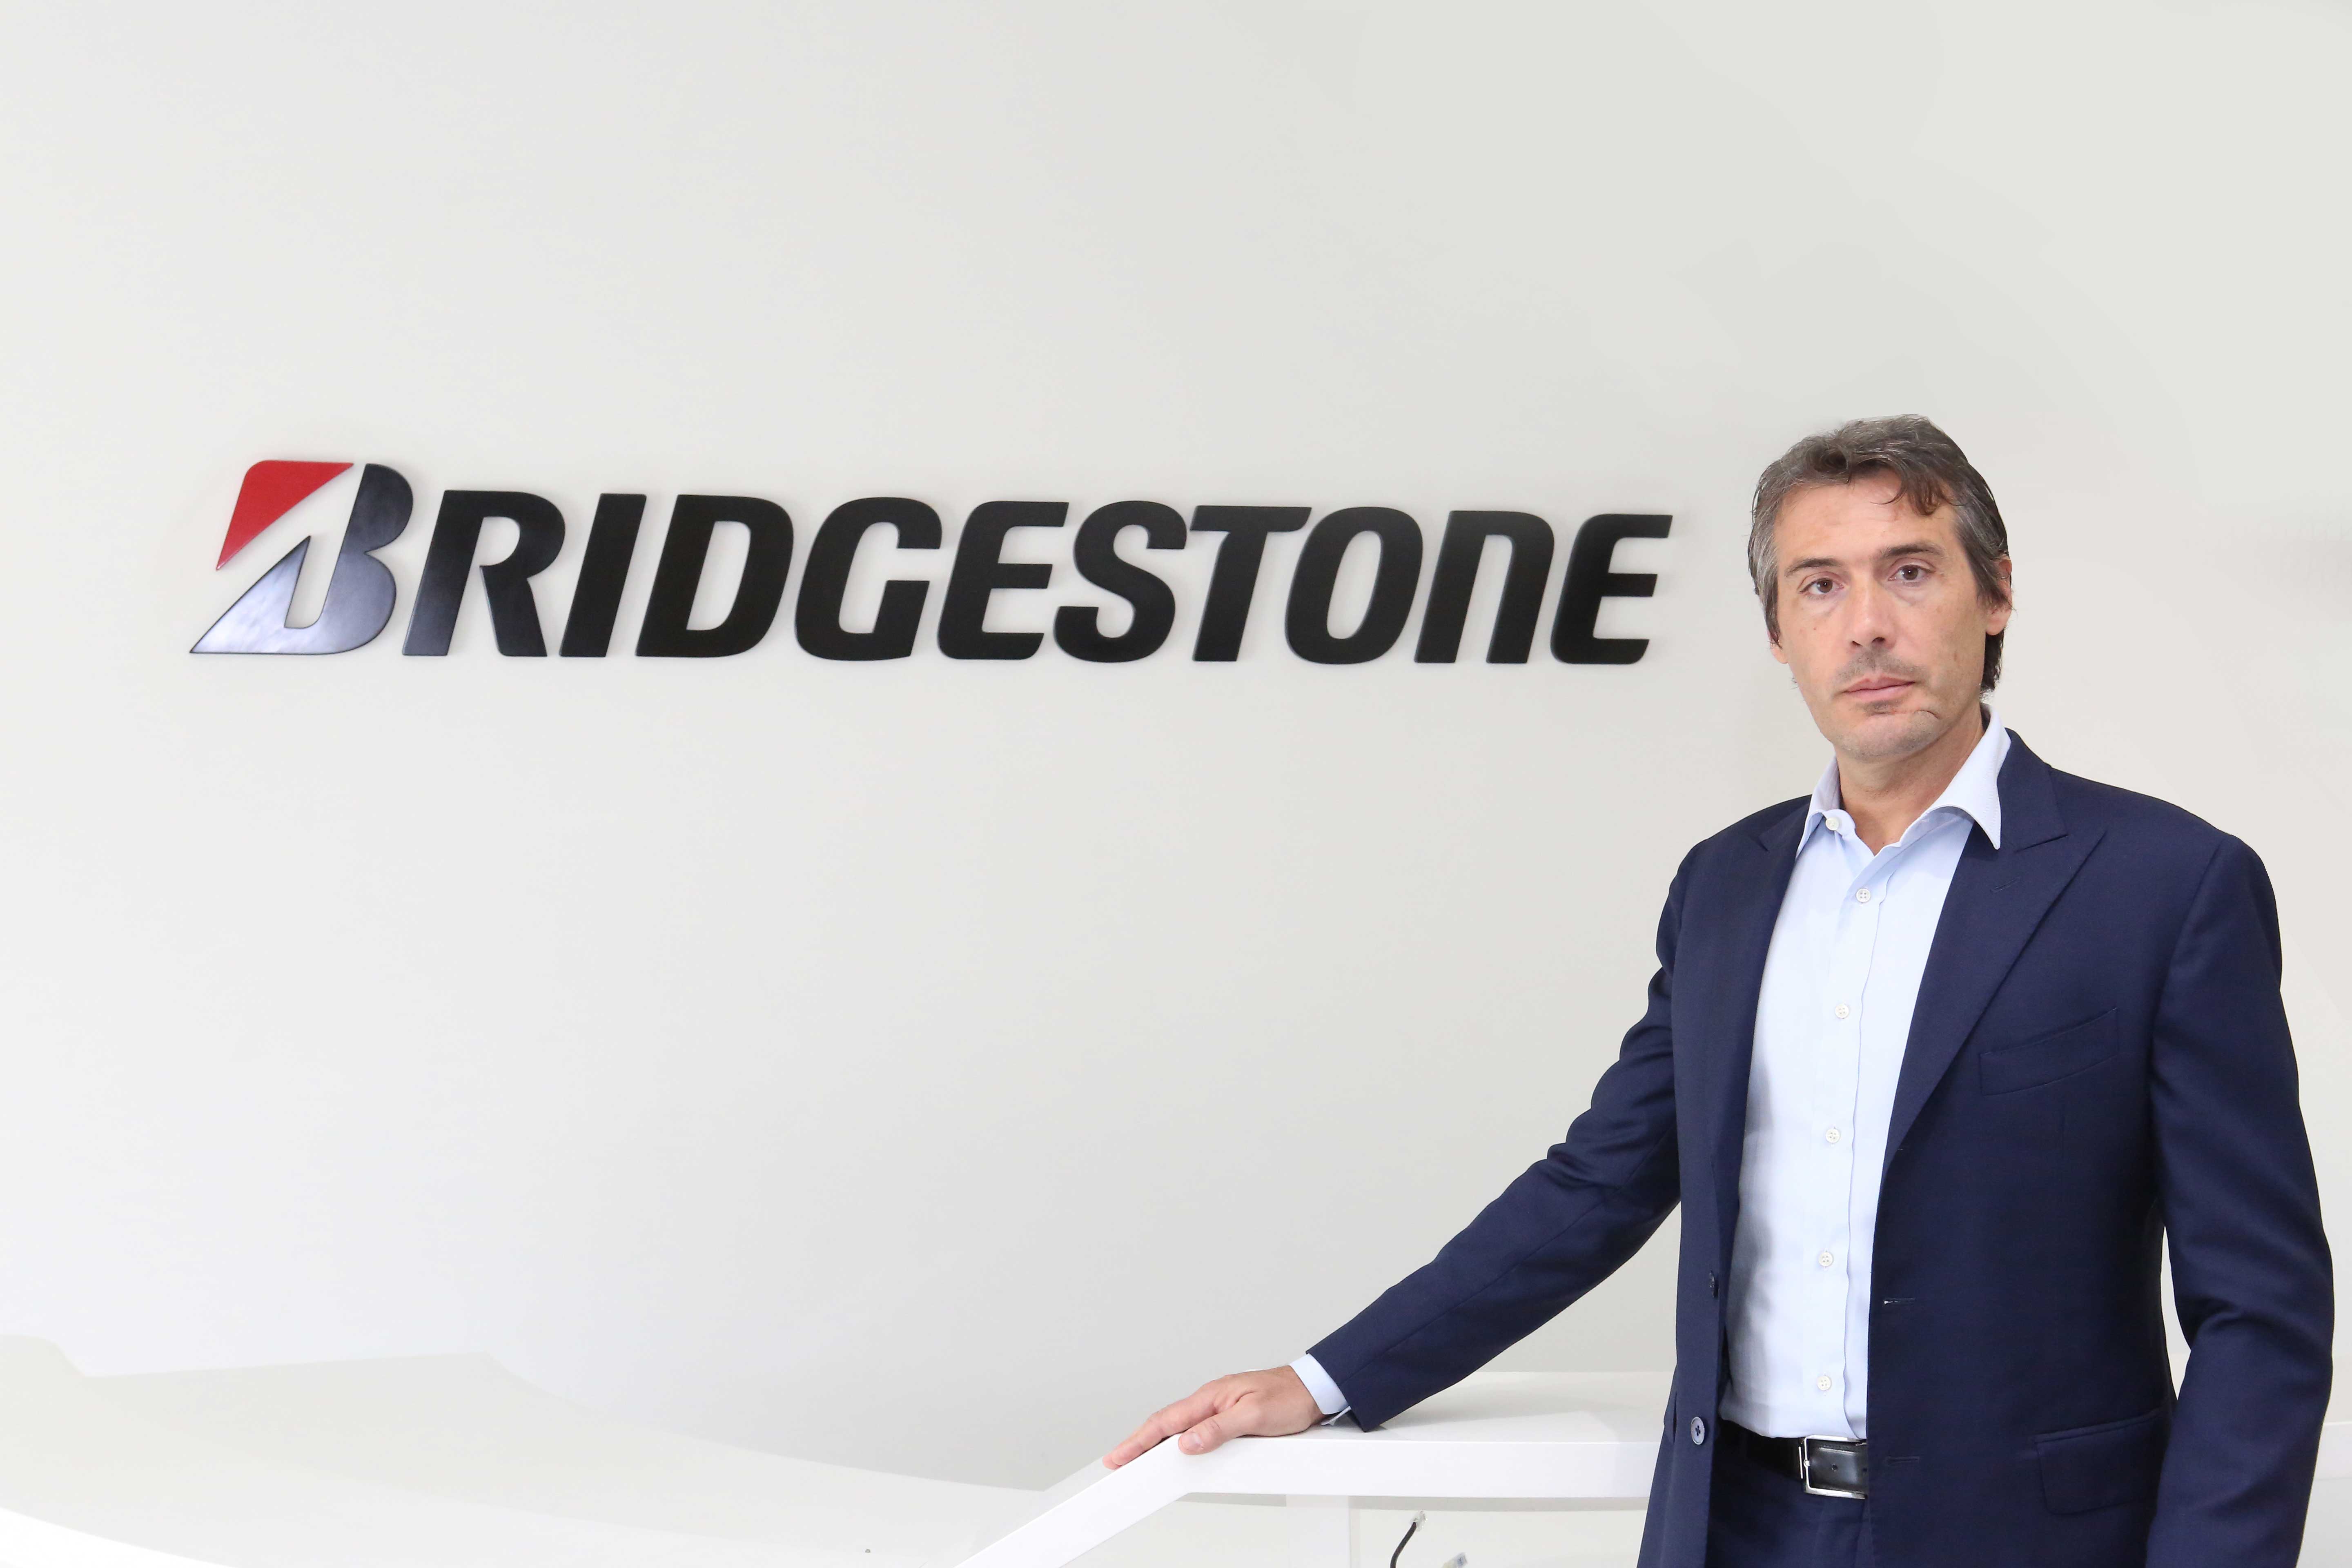 Interview with Stefano Sanchini - Regional MD at Bridgestone MEA